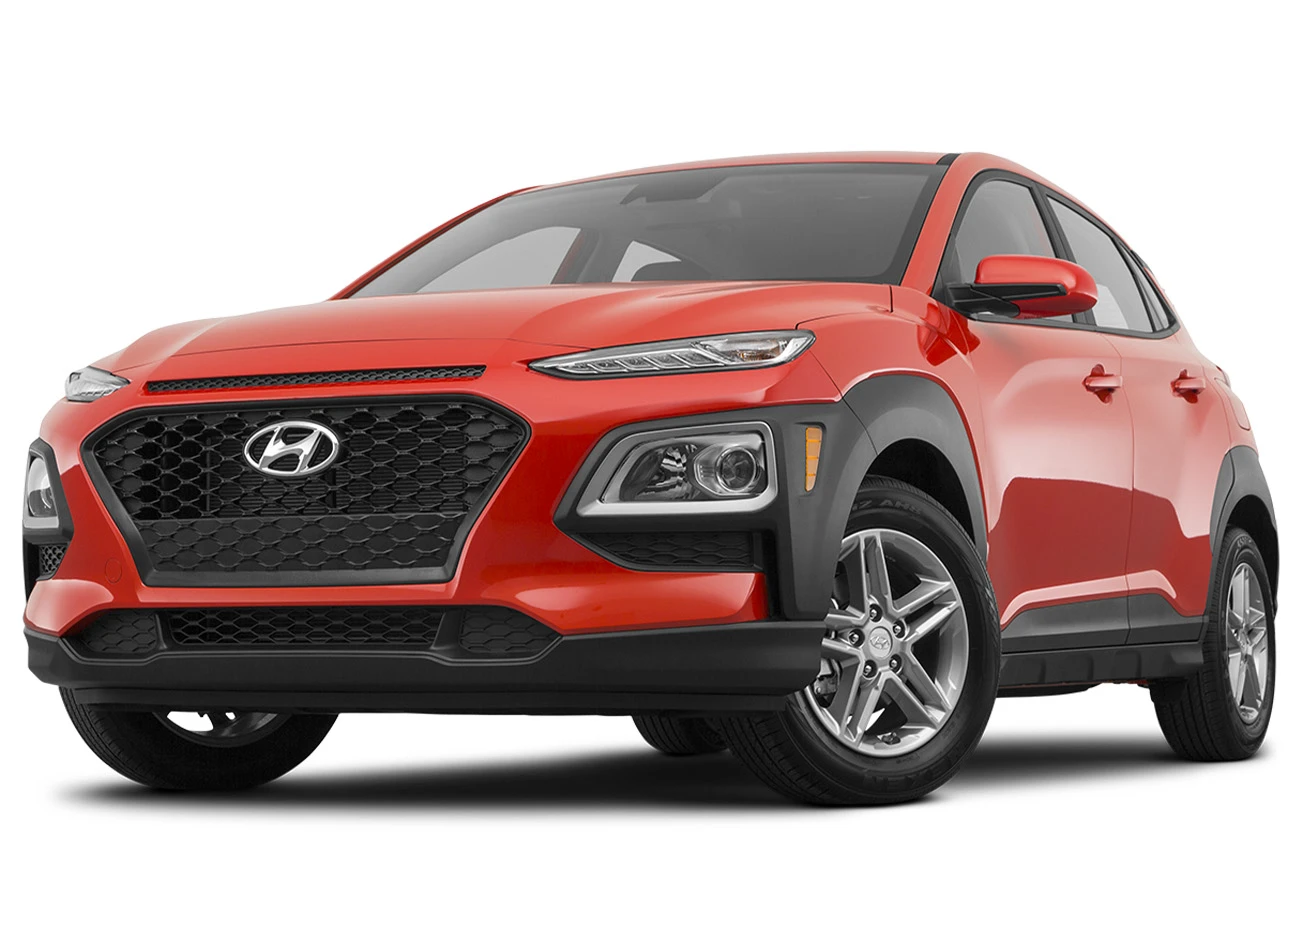 2020 Hyundai Kona: Exterior Front View | CarMax